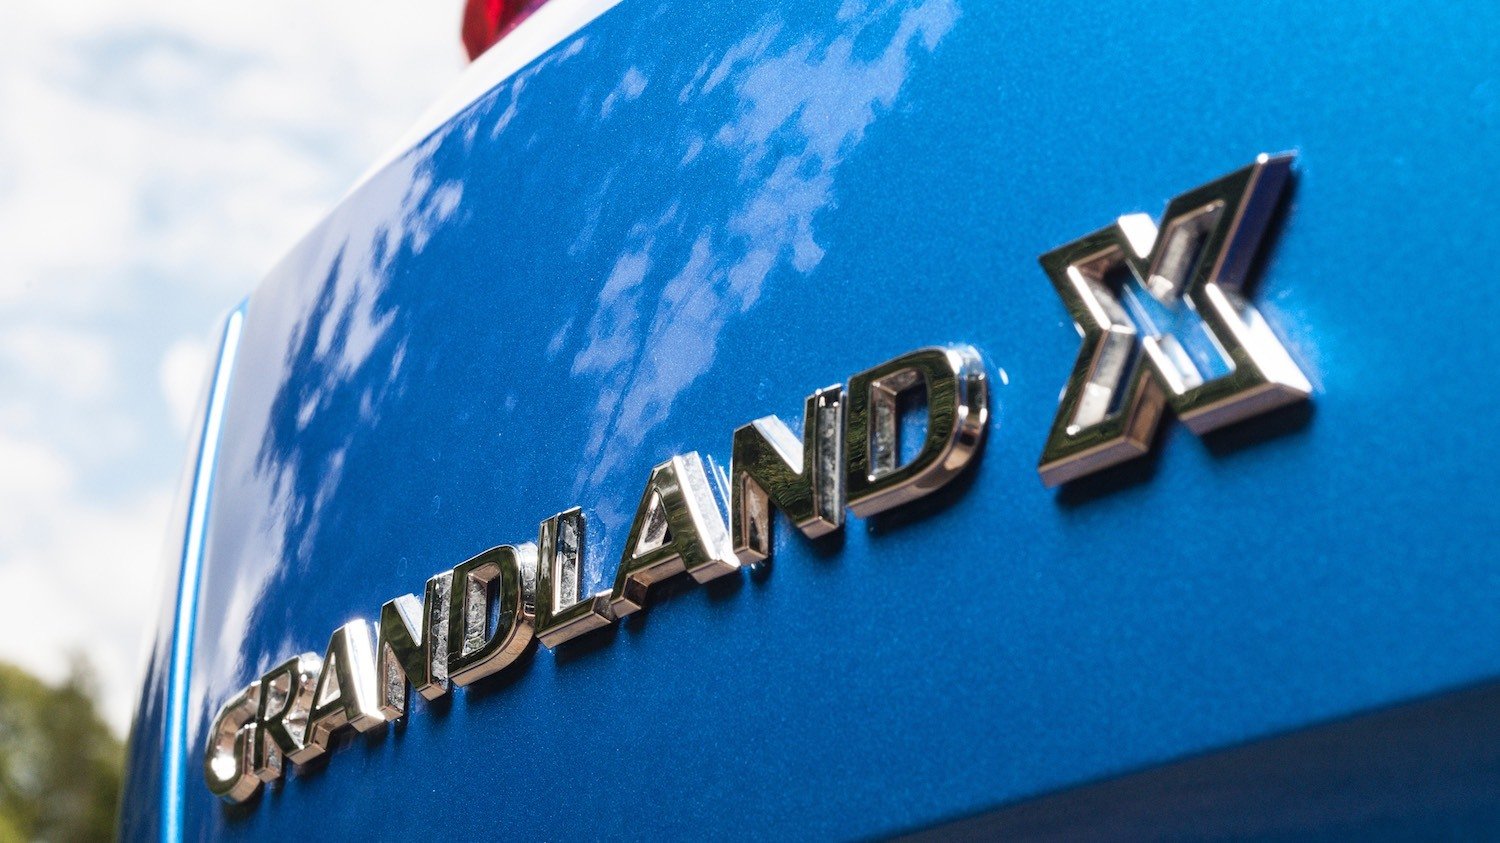 Tom Scanlan reviews the Vauxhall Grandland X SUV for Drive 7